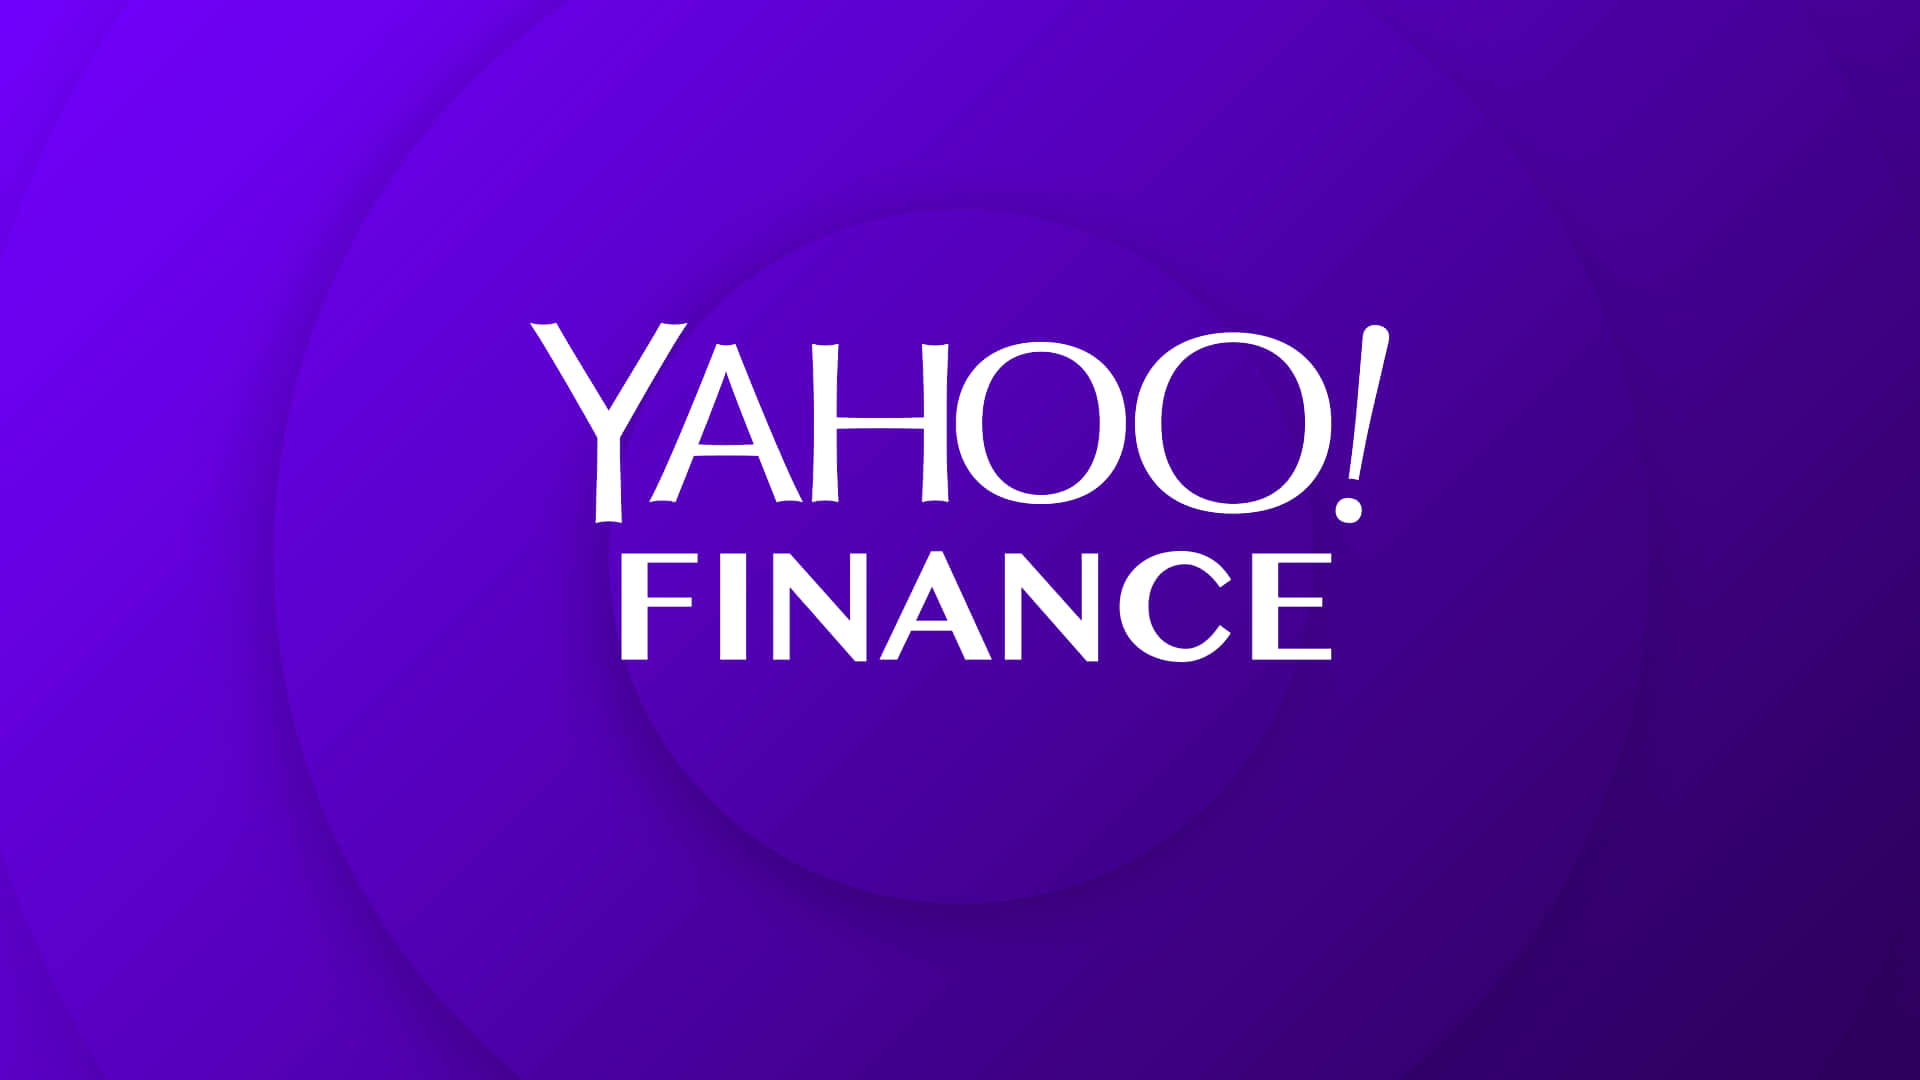 Yahoo Finance Logo On A Purple Background